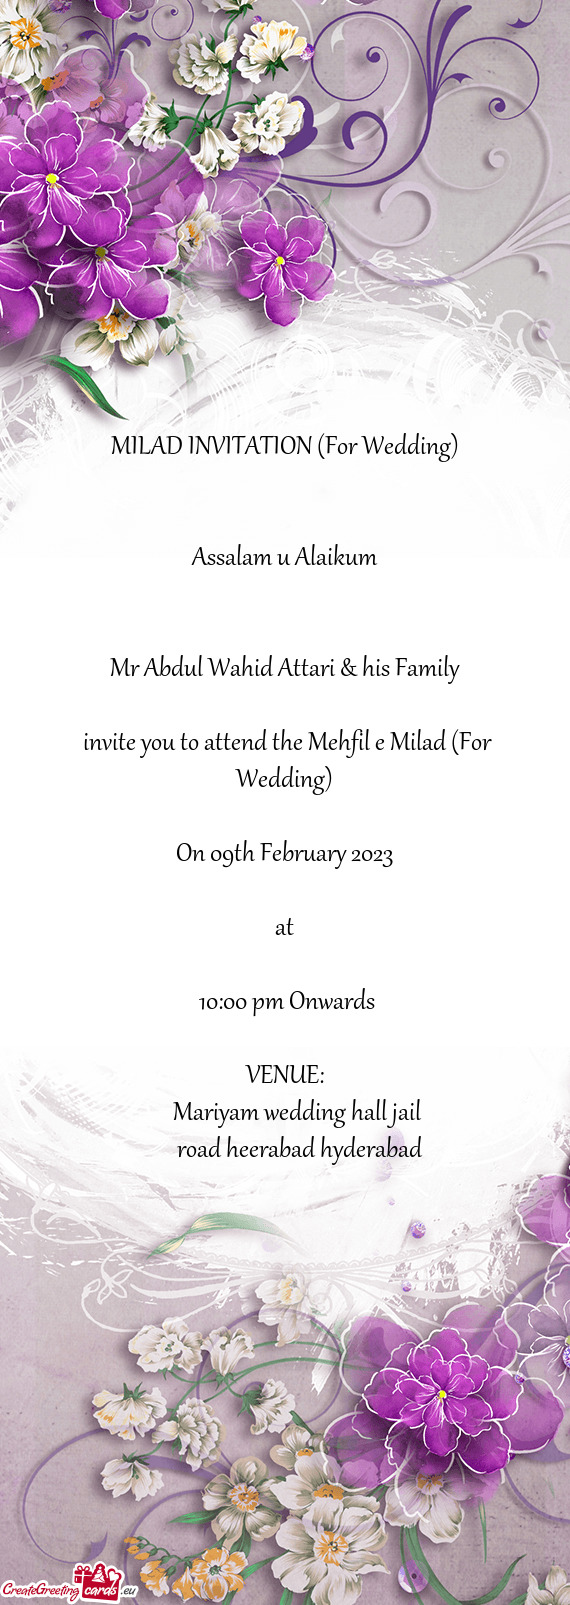 MILAD INVITATION (For Wedding)